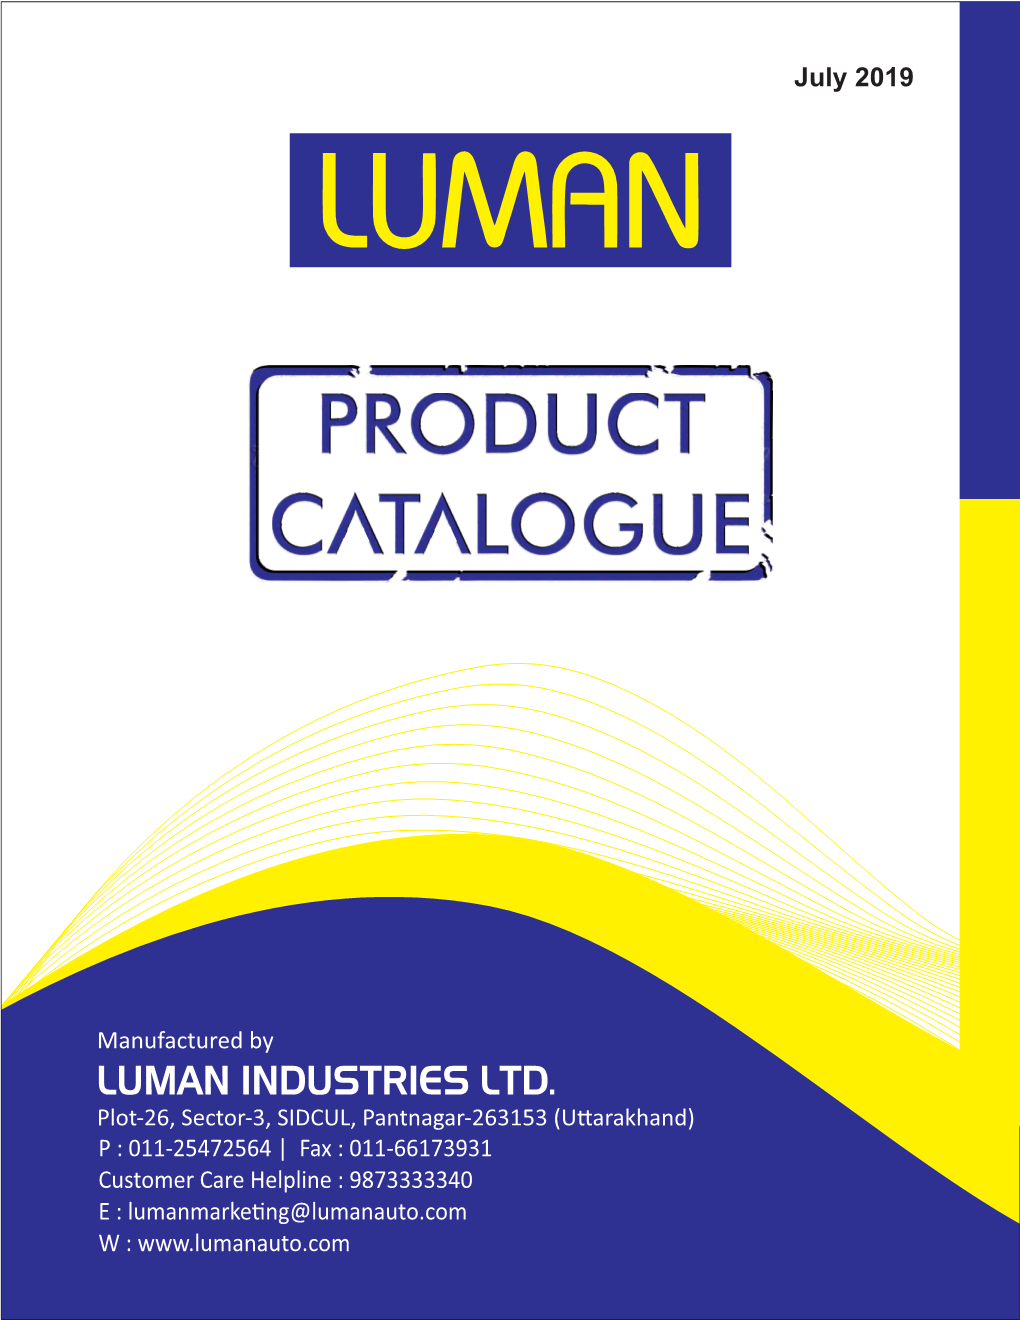 Luman Catalouge Design